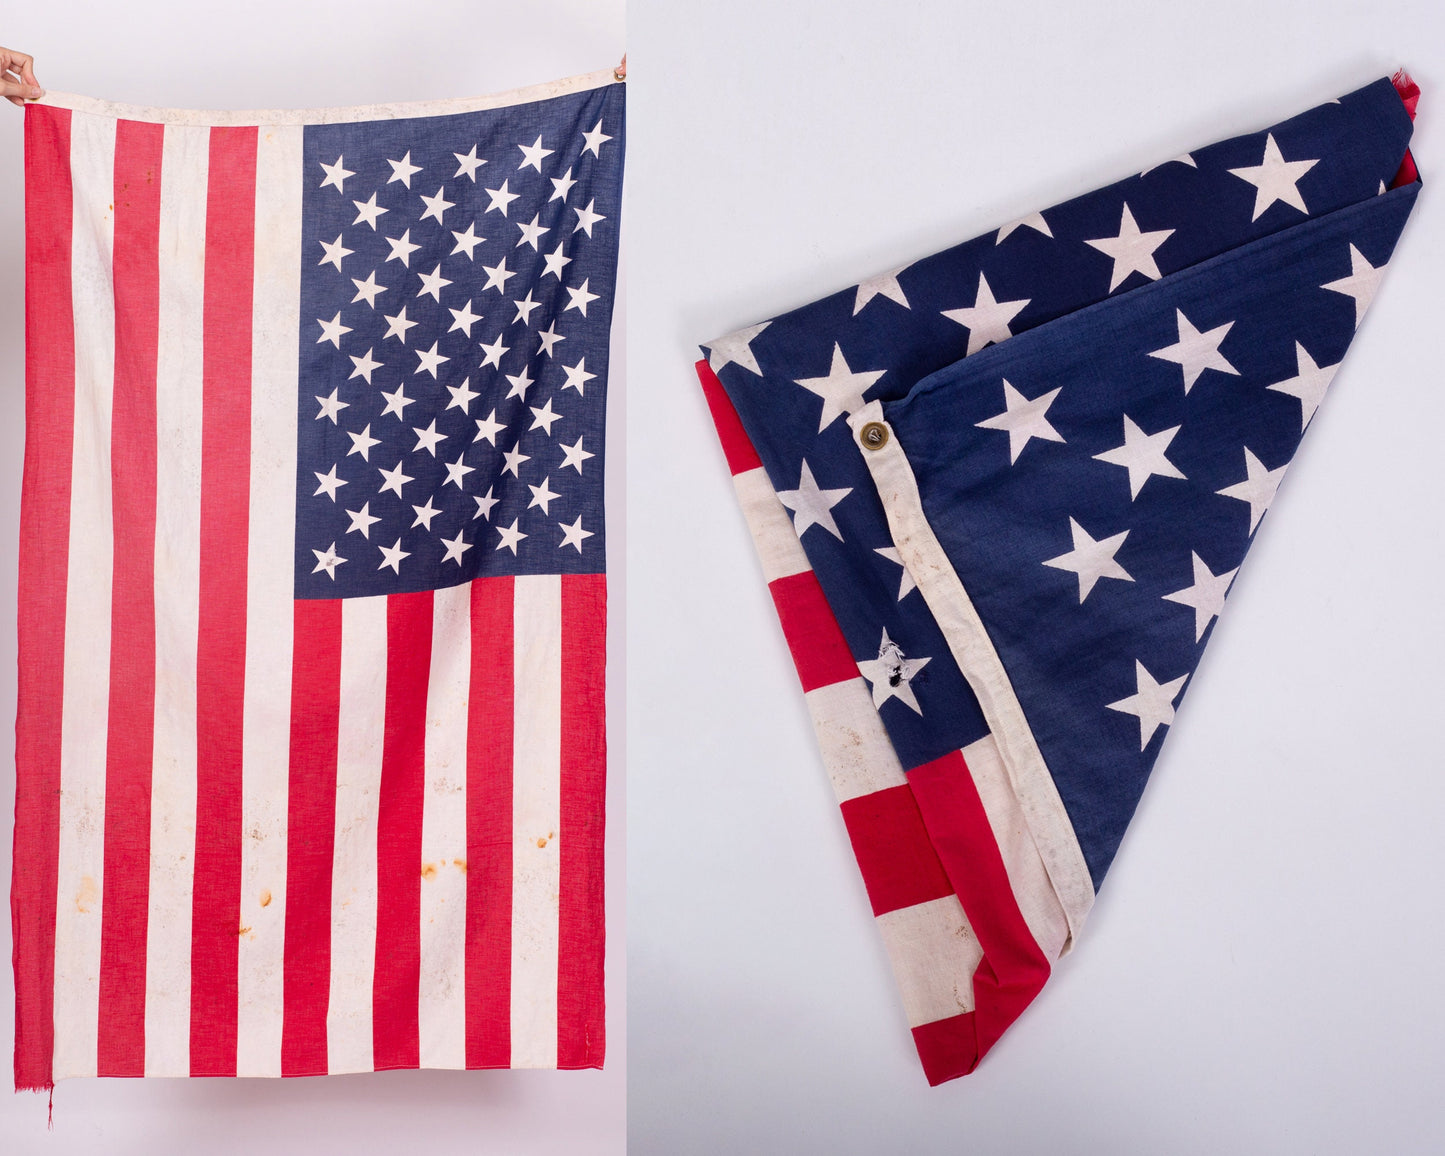 Vintage Aged American Flag - 3'x5' 